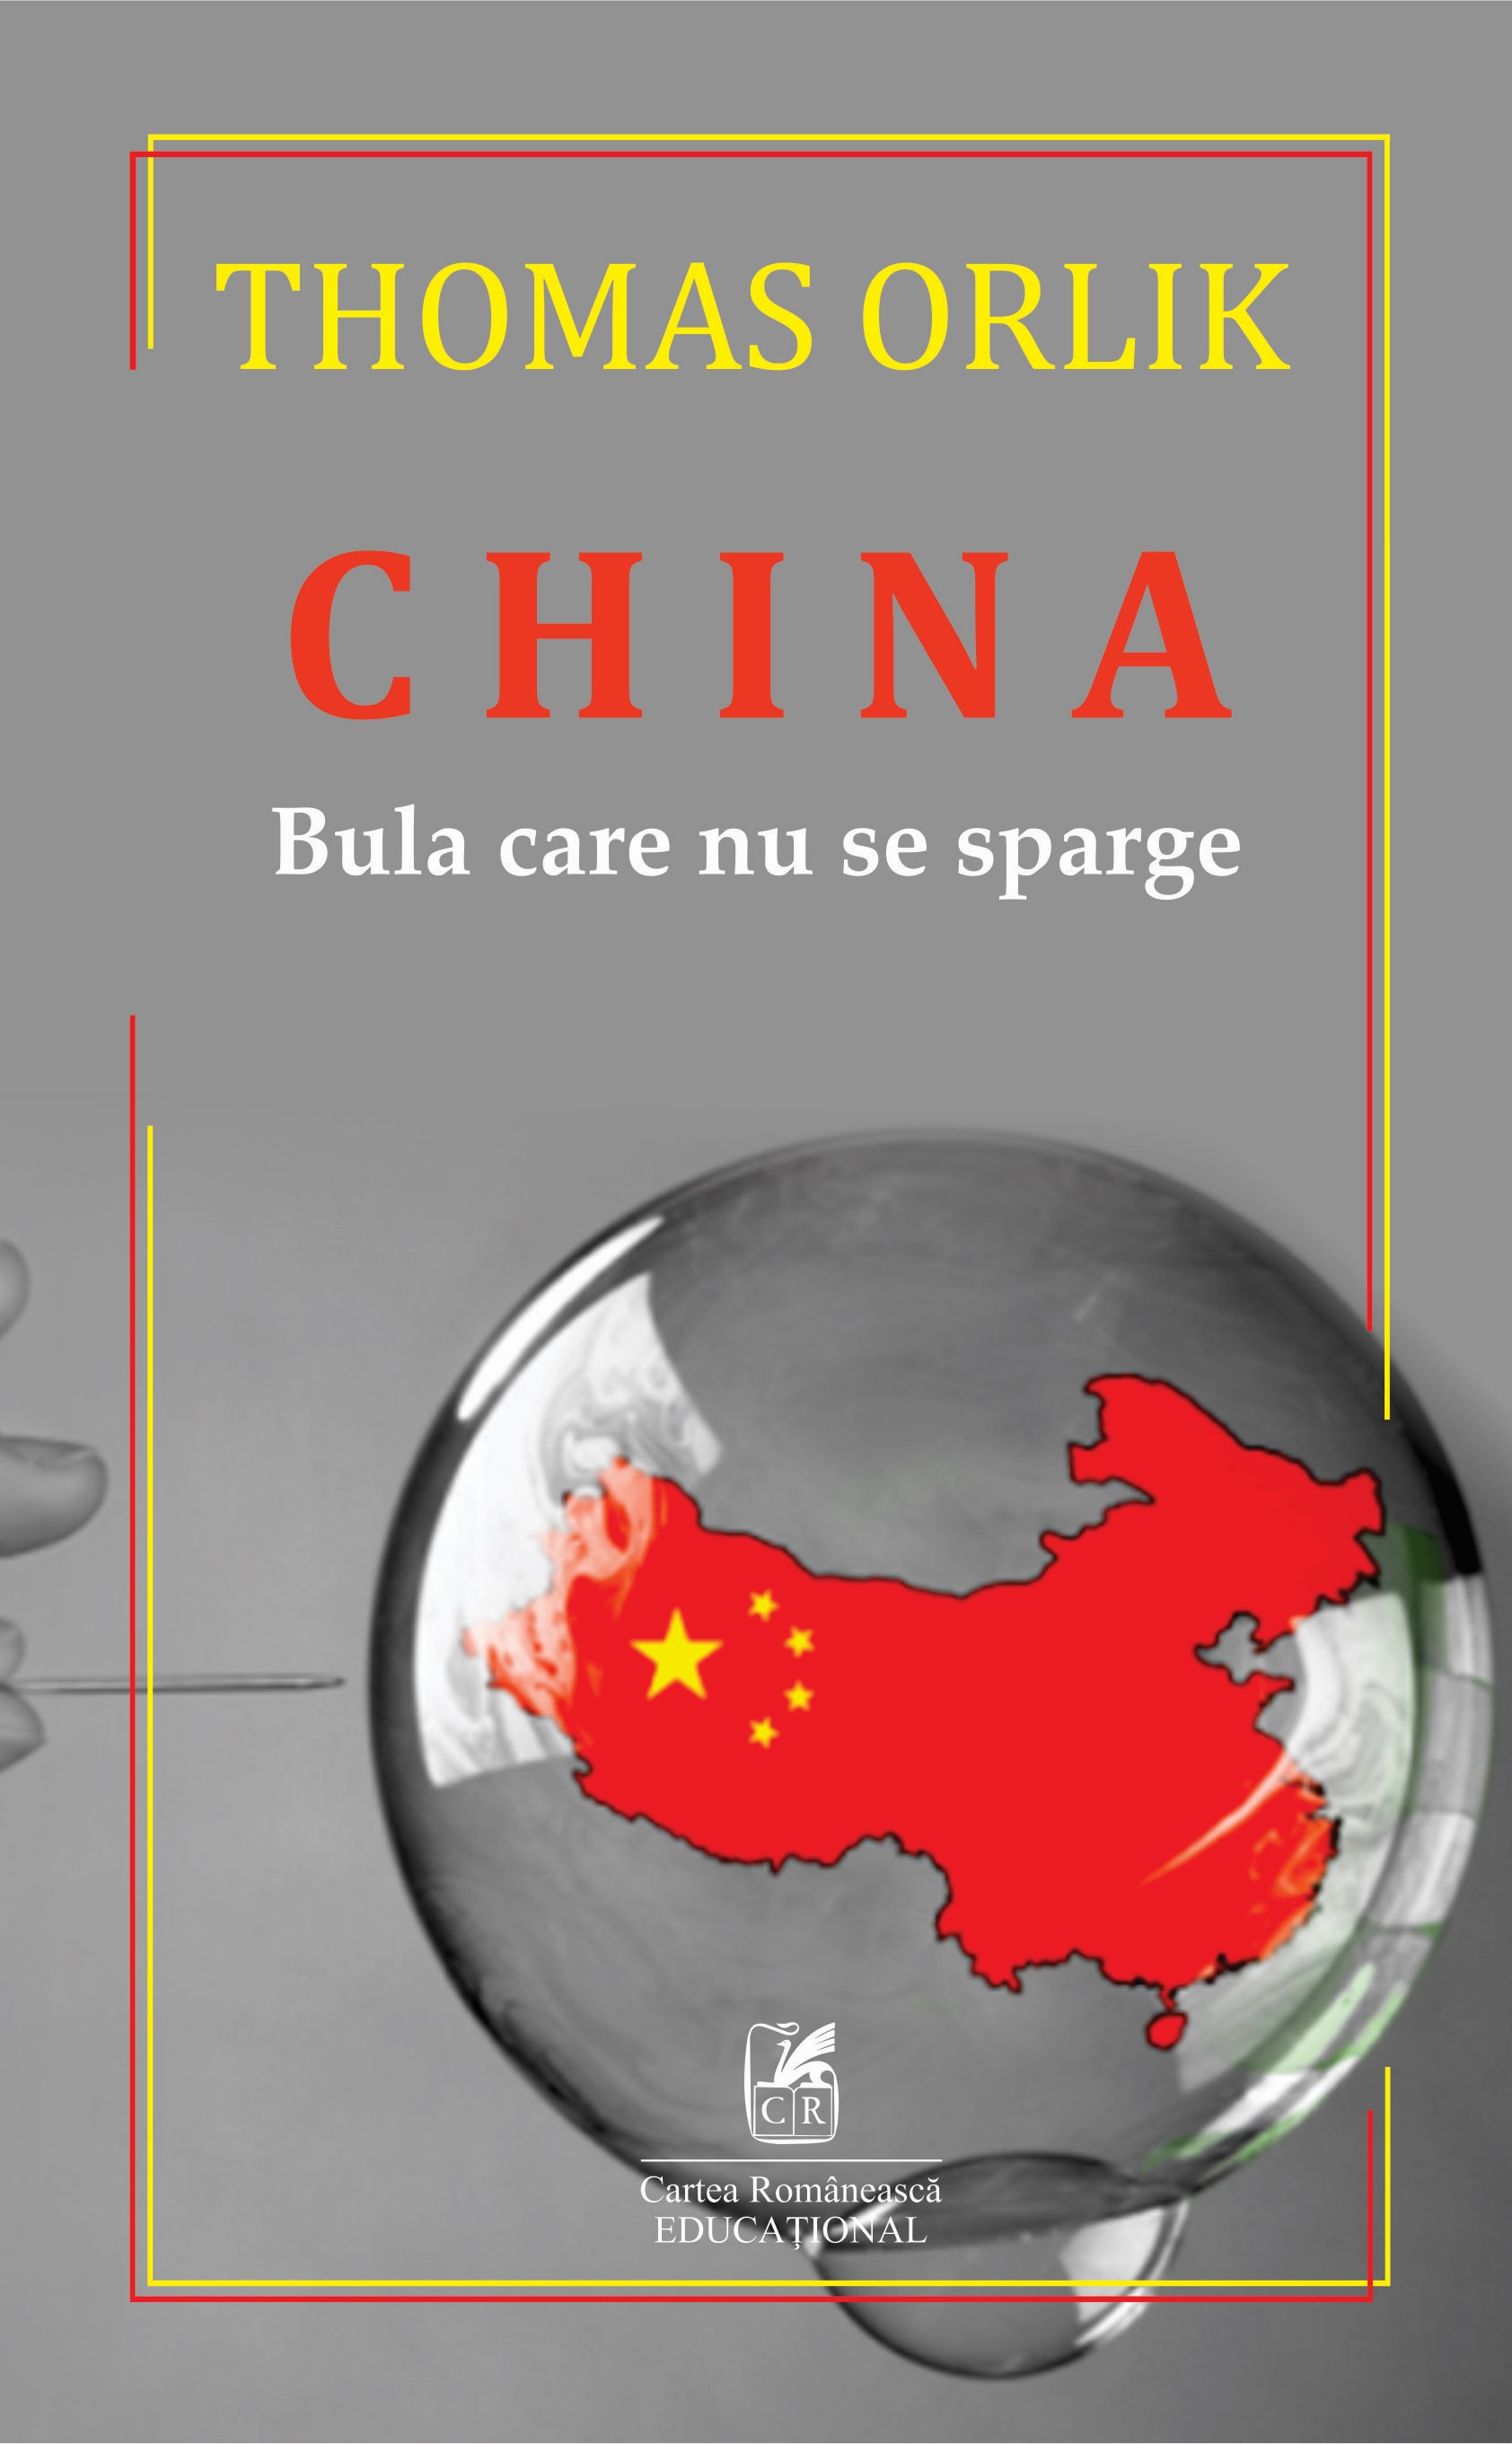 China | Thomas Orlik Cartea Romaneasca educational 2022